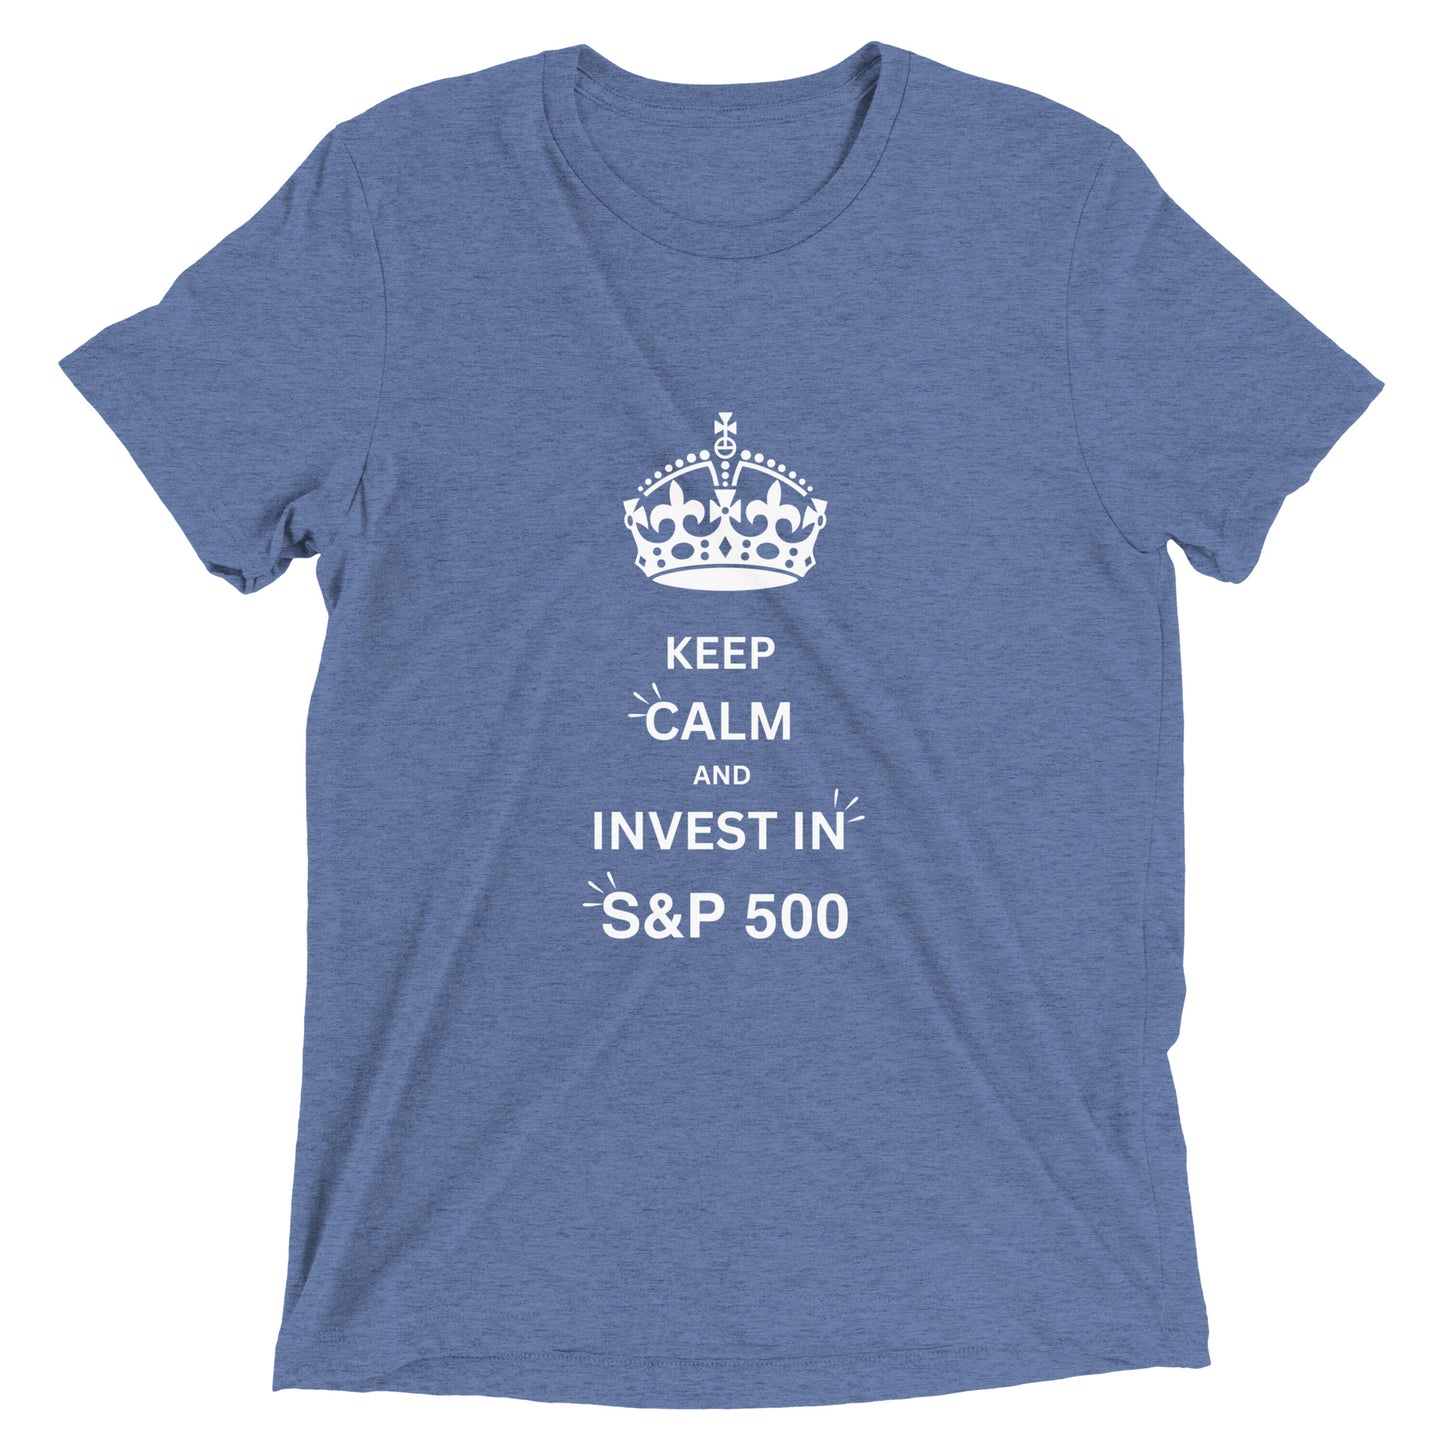 Keep calm, Meme, Quote, Stock market, Money, Investment, Finance, Money, Savings, Growth, Unisex, T-shirt